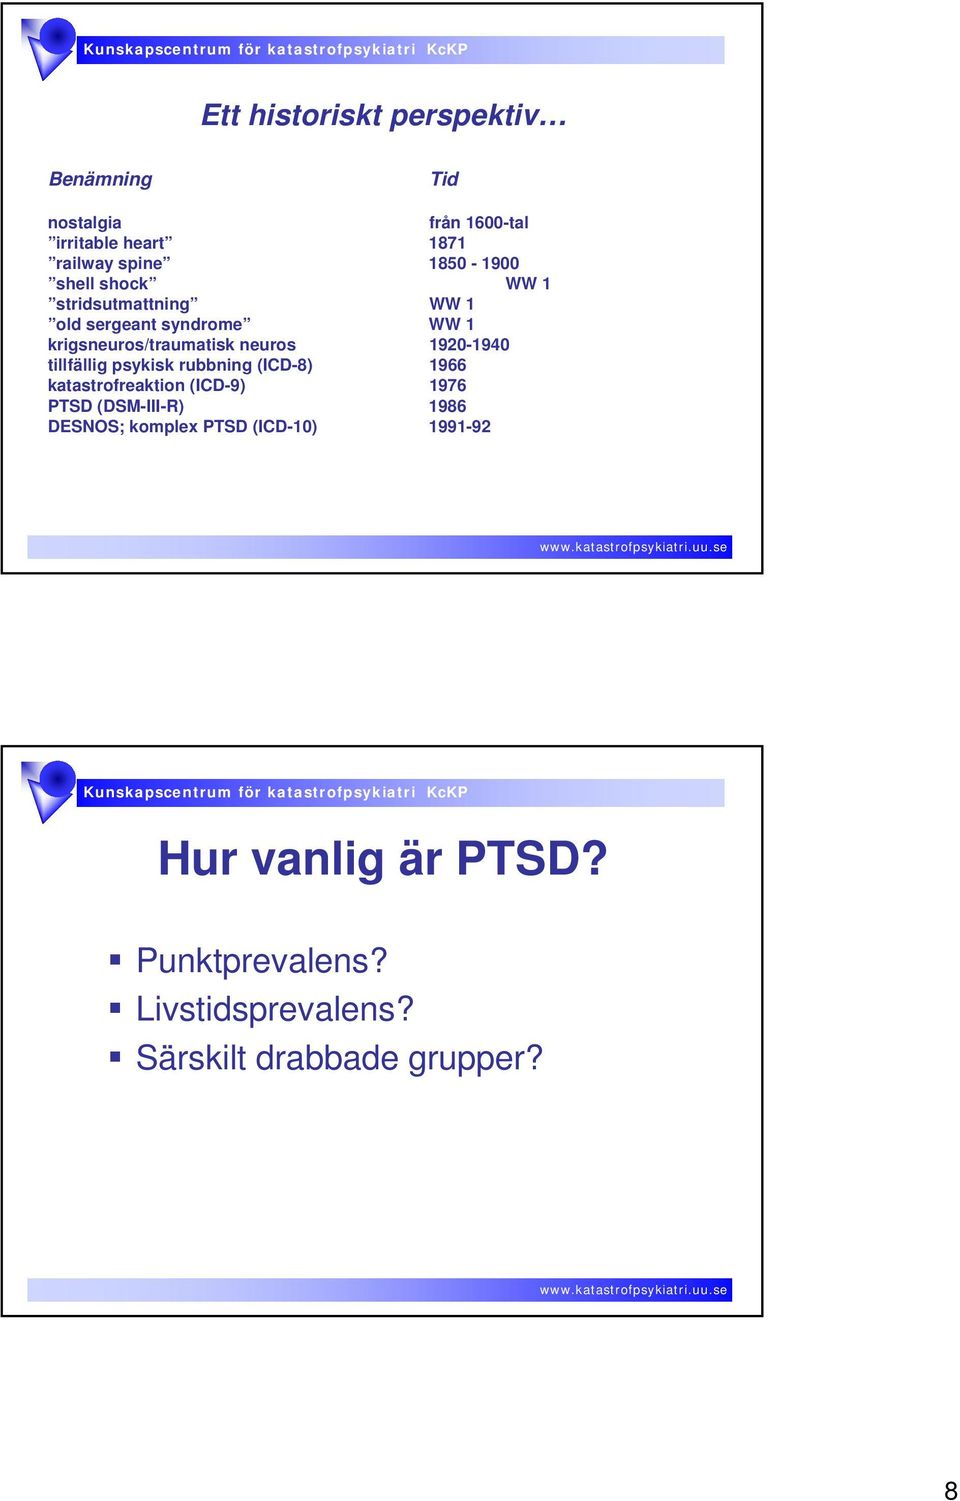 1920-1940 tillfällig psykisk rubbning (ICD-8) 1966 katastrofreaktion (ICD-9) 1976 PTSD (DSM-III-R) 1986